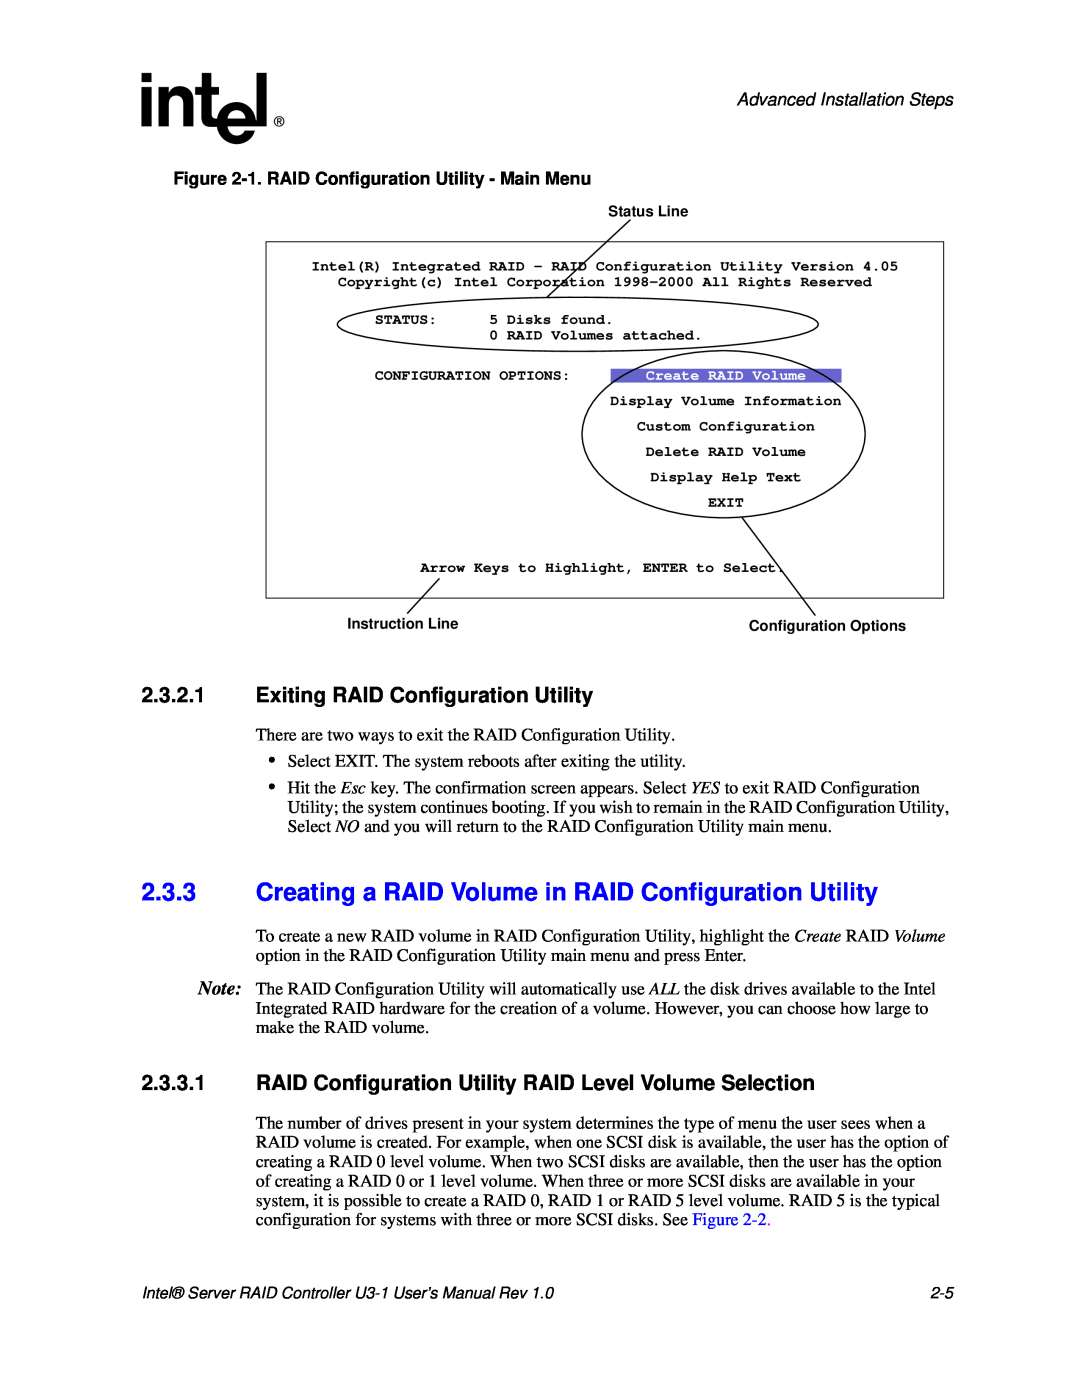 Intel SRCU31 user manual 2.3.2.1Exiting RAID Configuration Utility, Advanced Installation Steps 